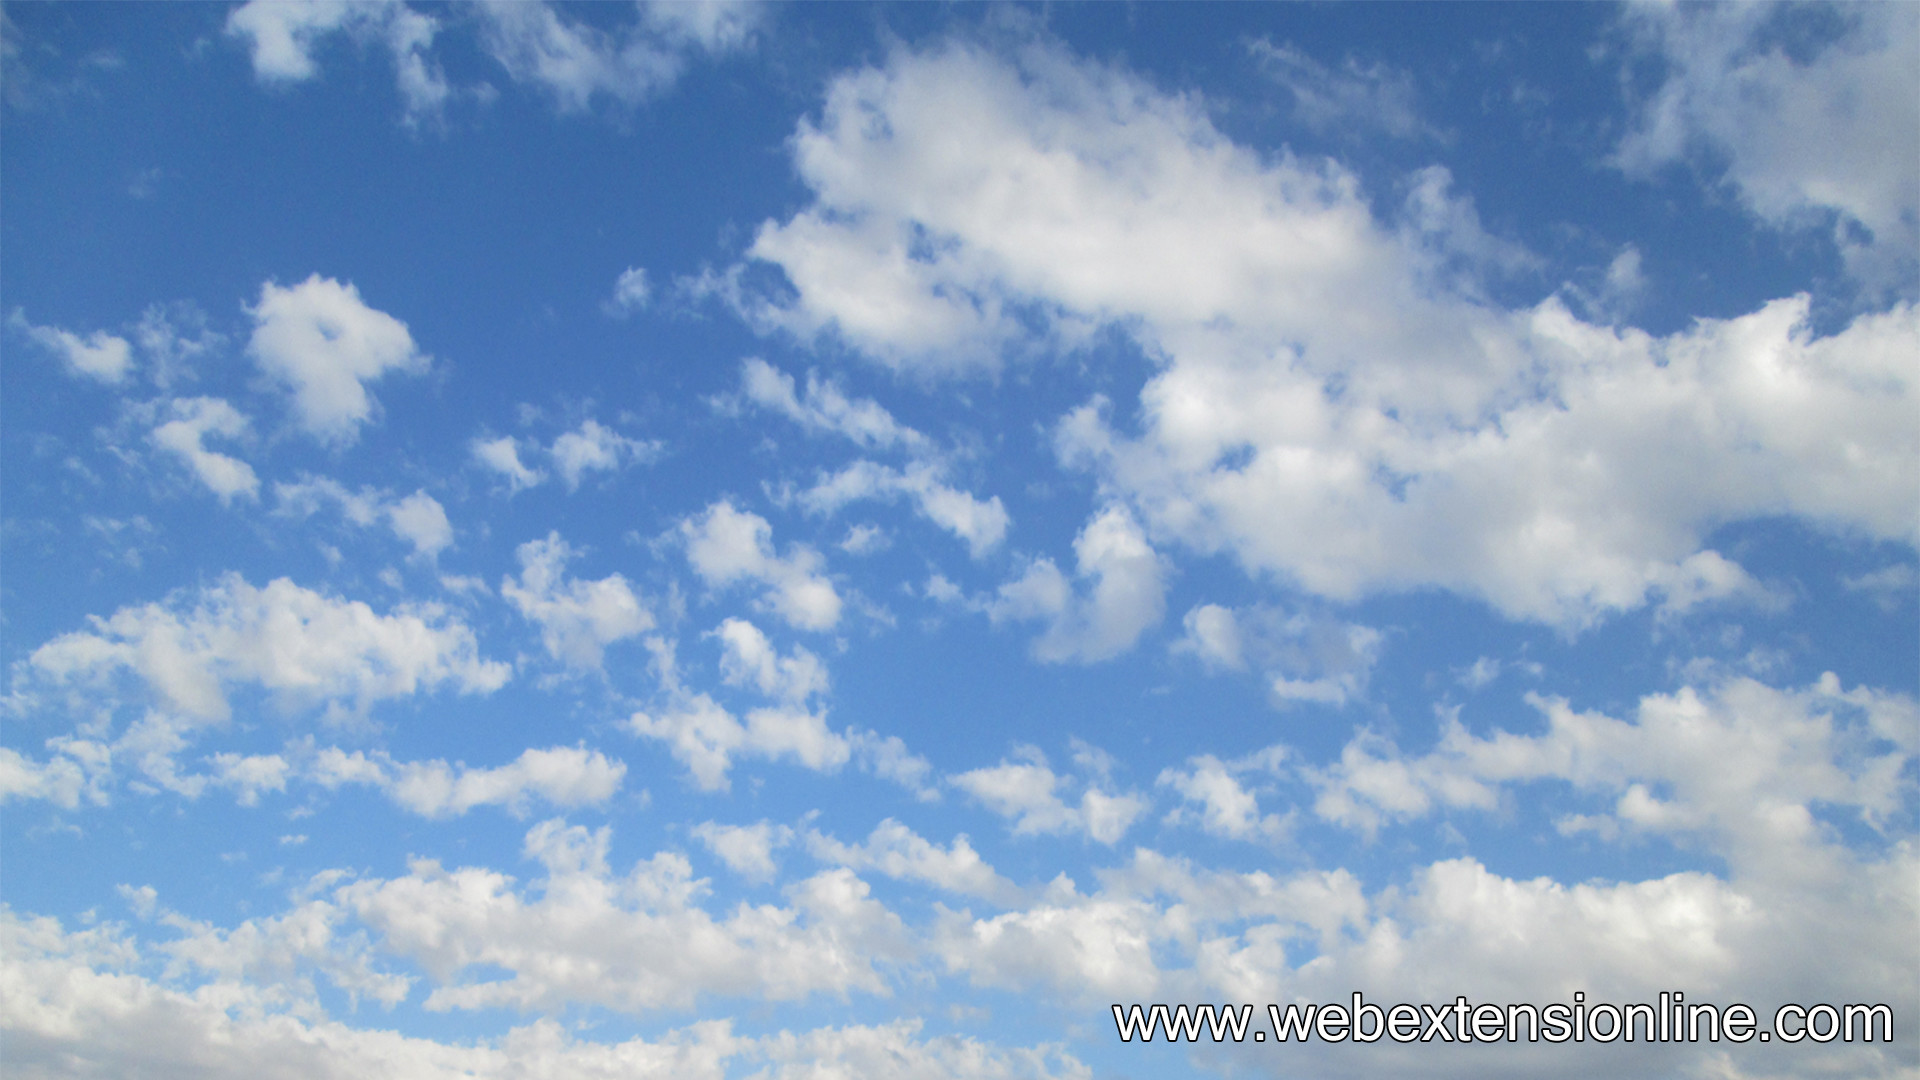 Hd Blue Sky White Clouds Wallpaper Data-src - Sky With Clouds Wallpaper Hd  - 1920x1080 Wallpaper 